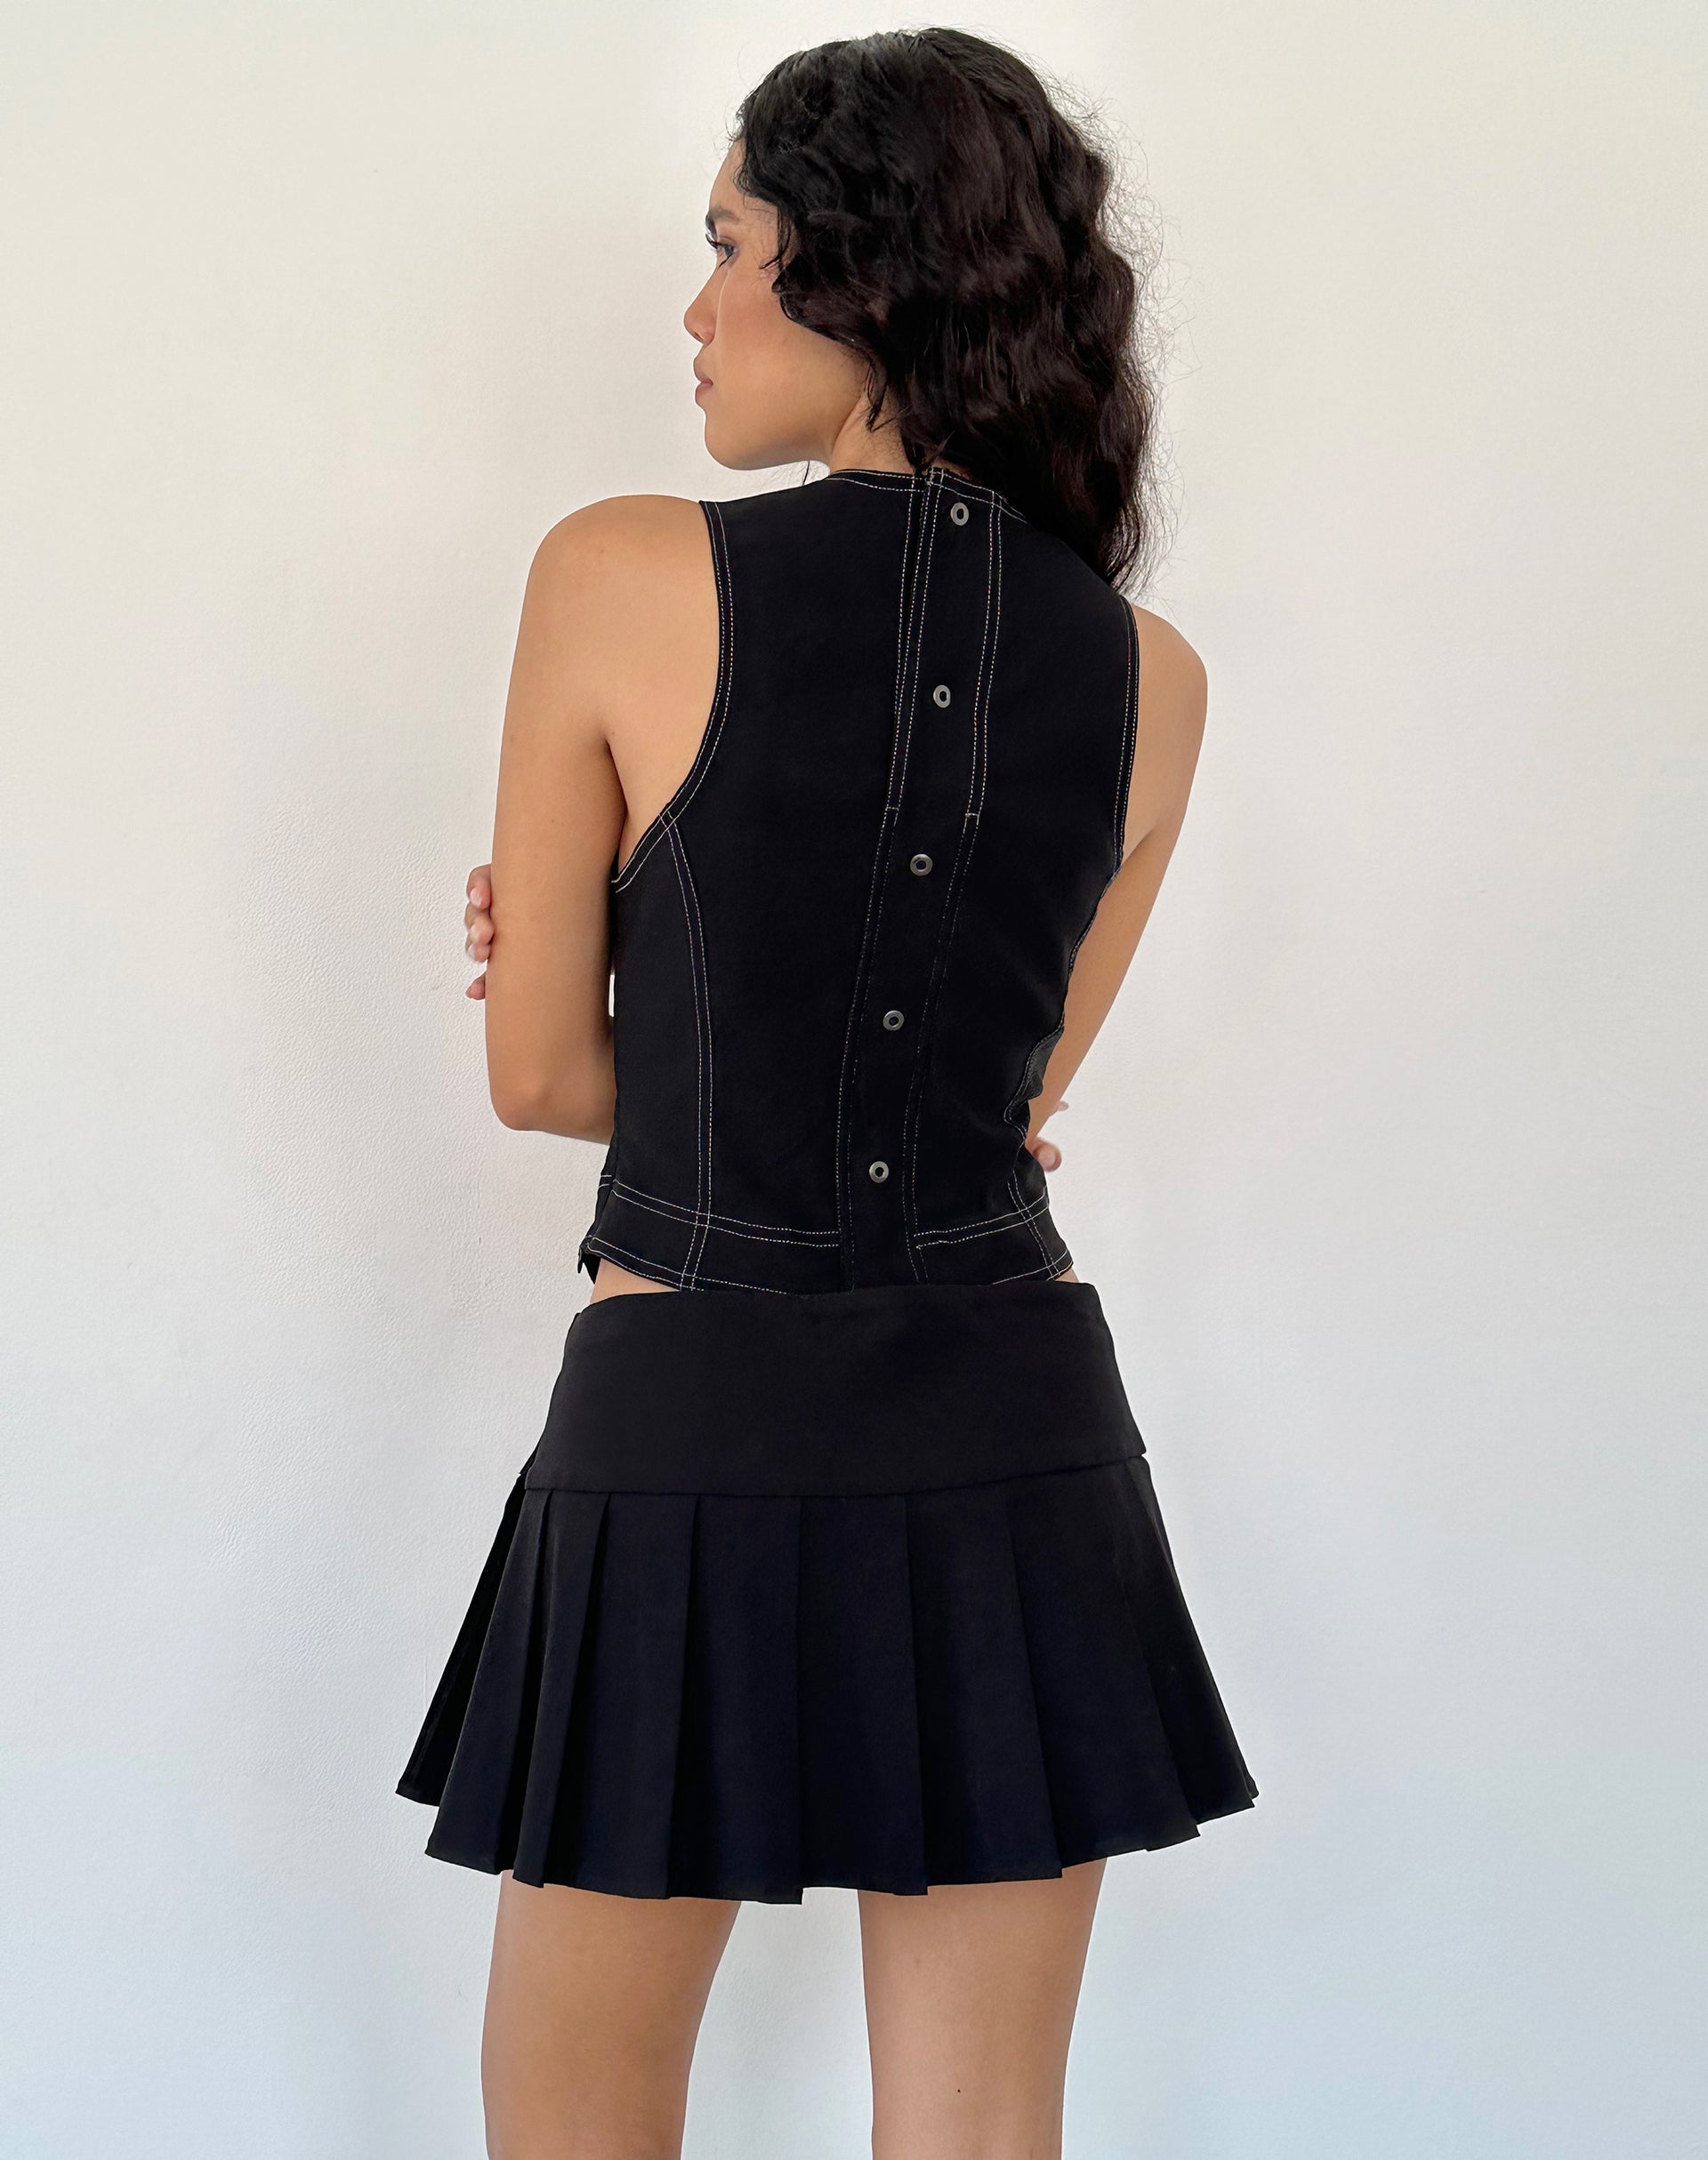 Image of Verbena Lace Panel Top in Black Tailoring